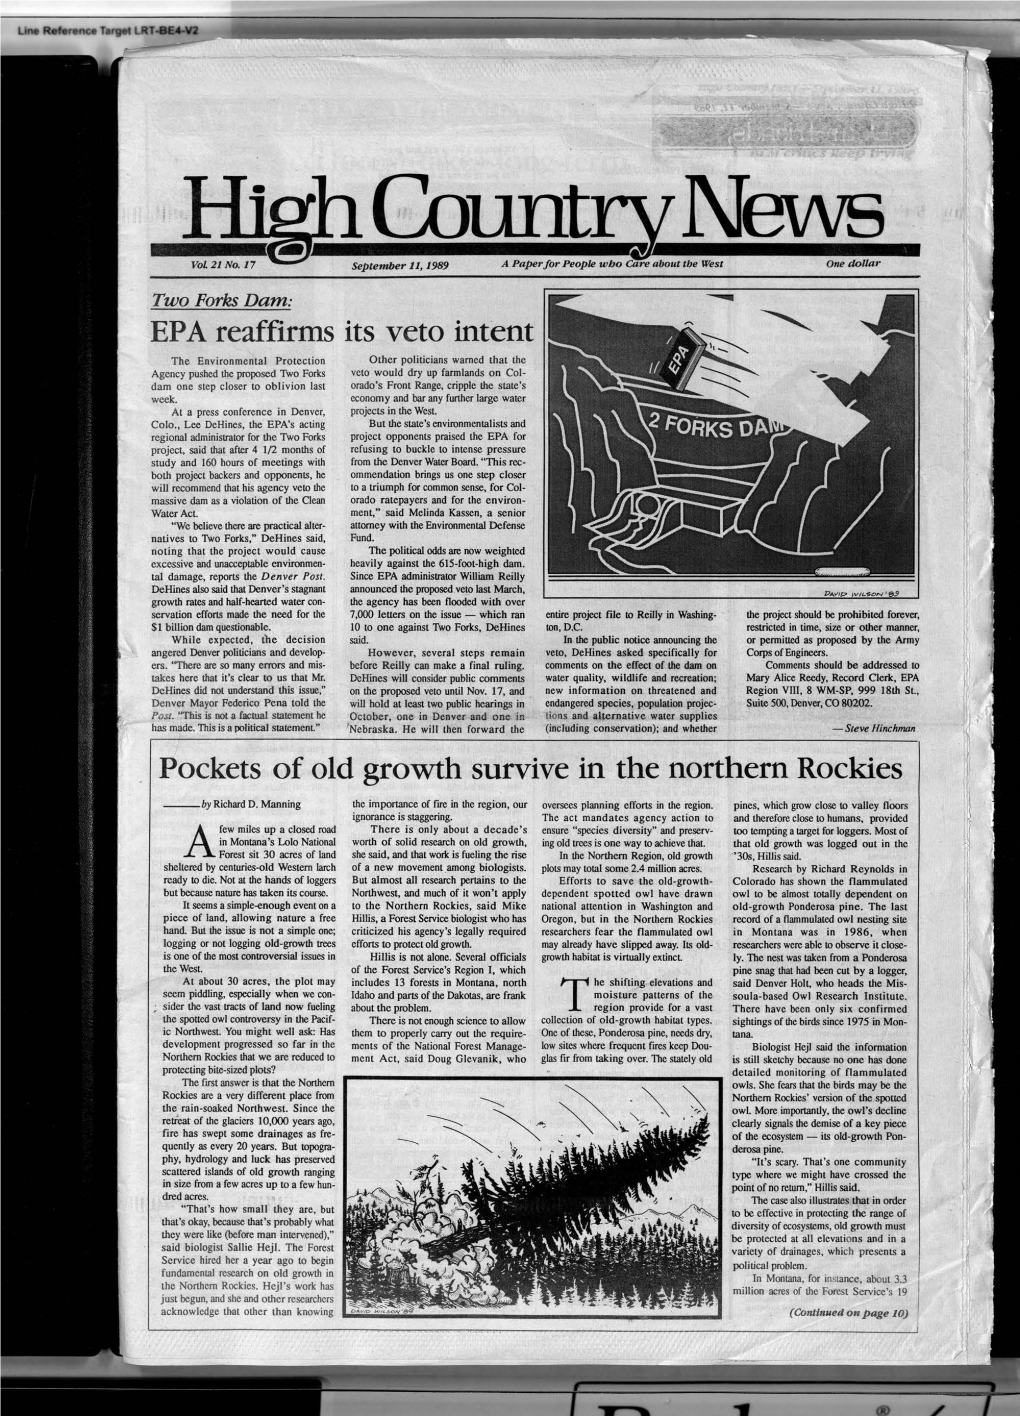 High Country News Vol. 21.17, Sept. 11, 1989